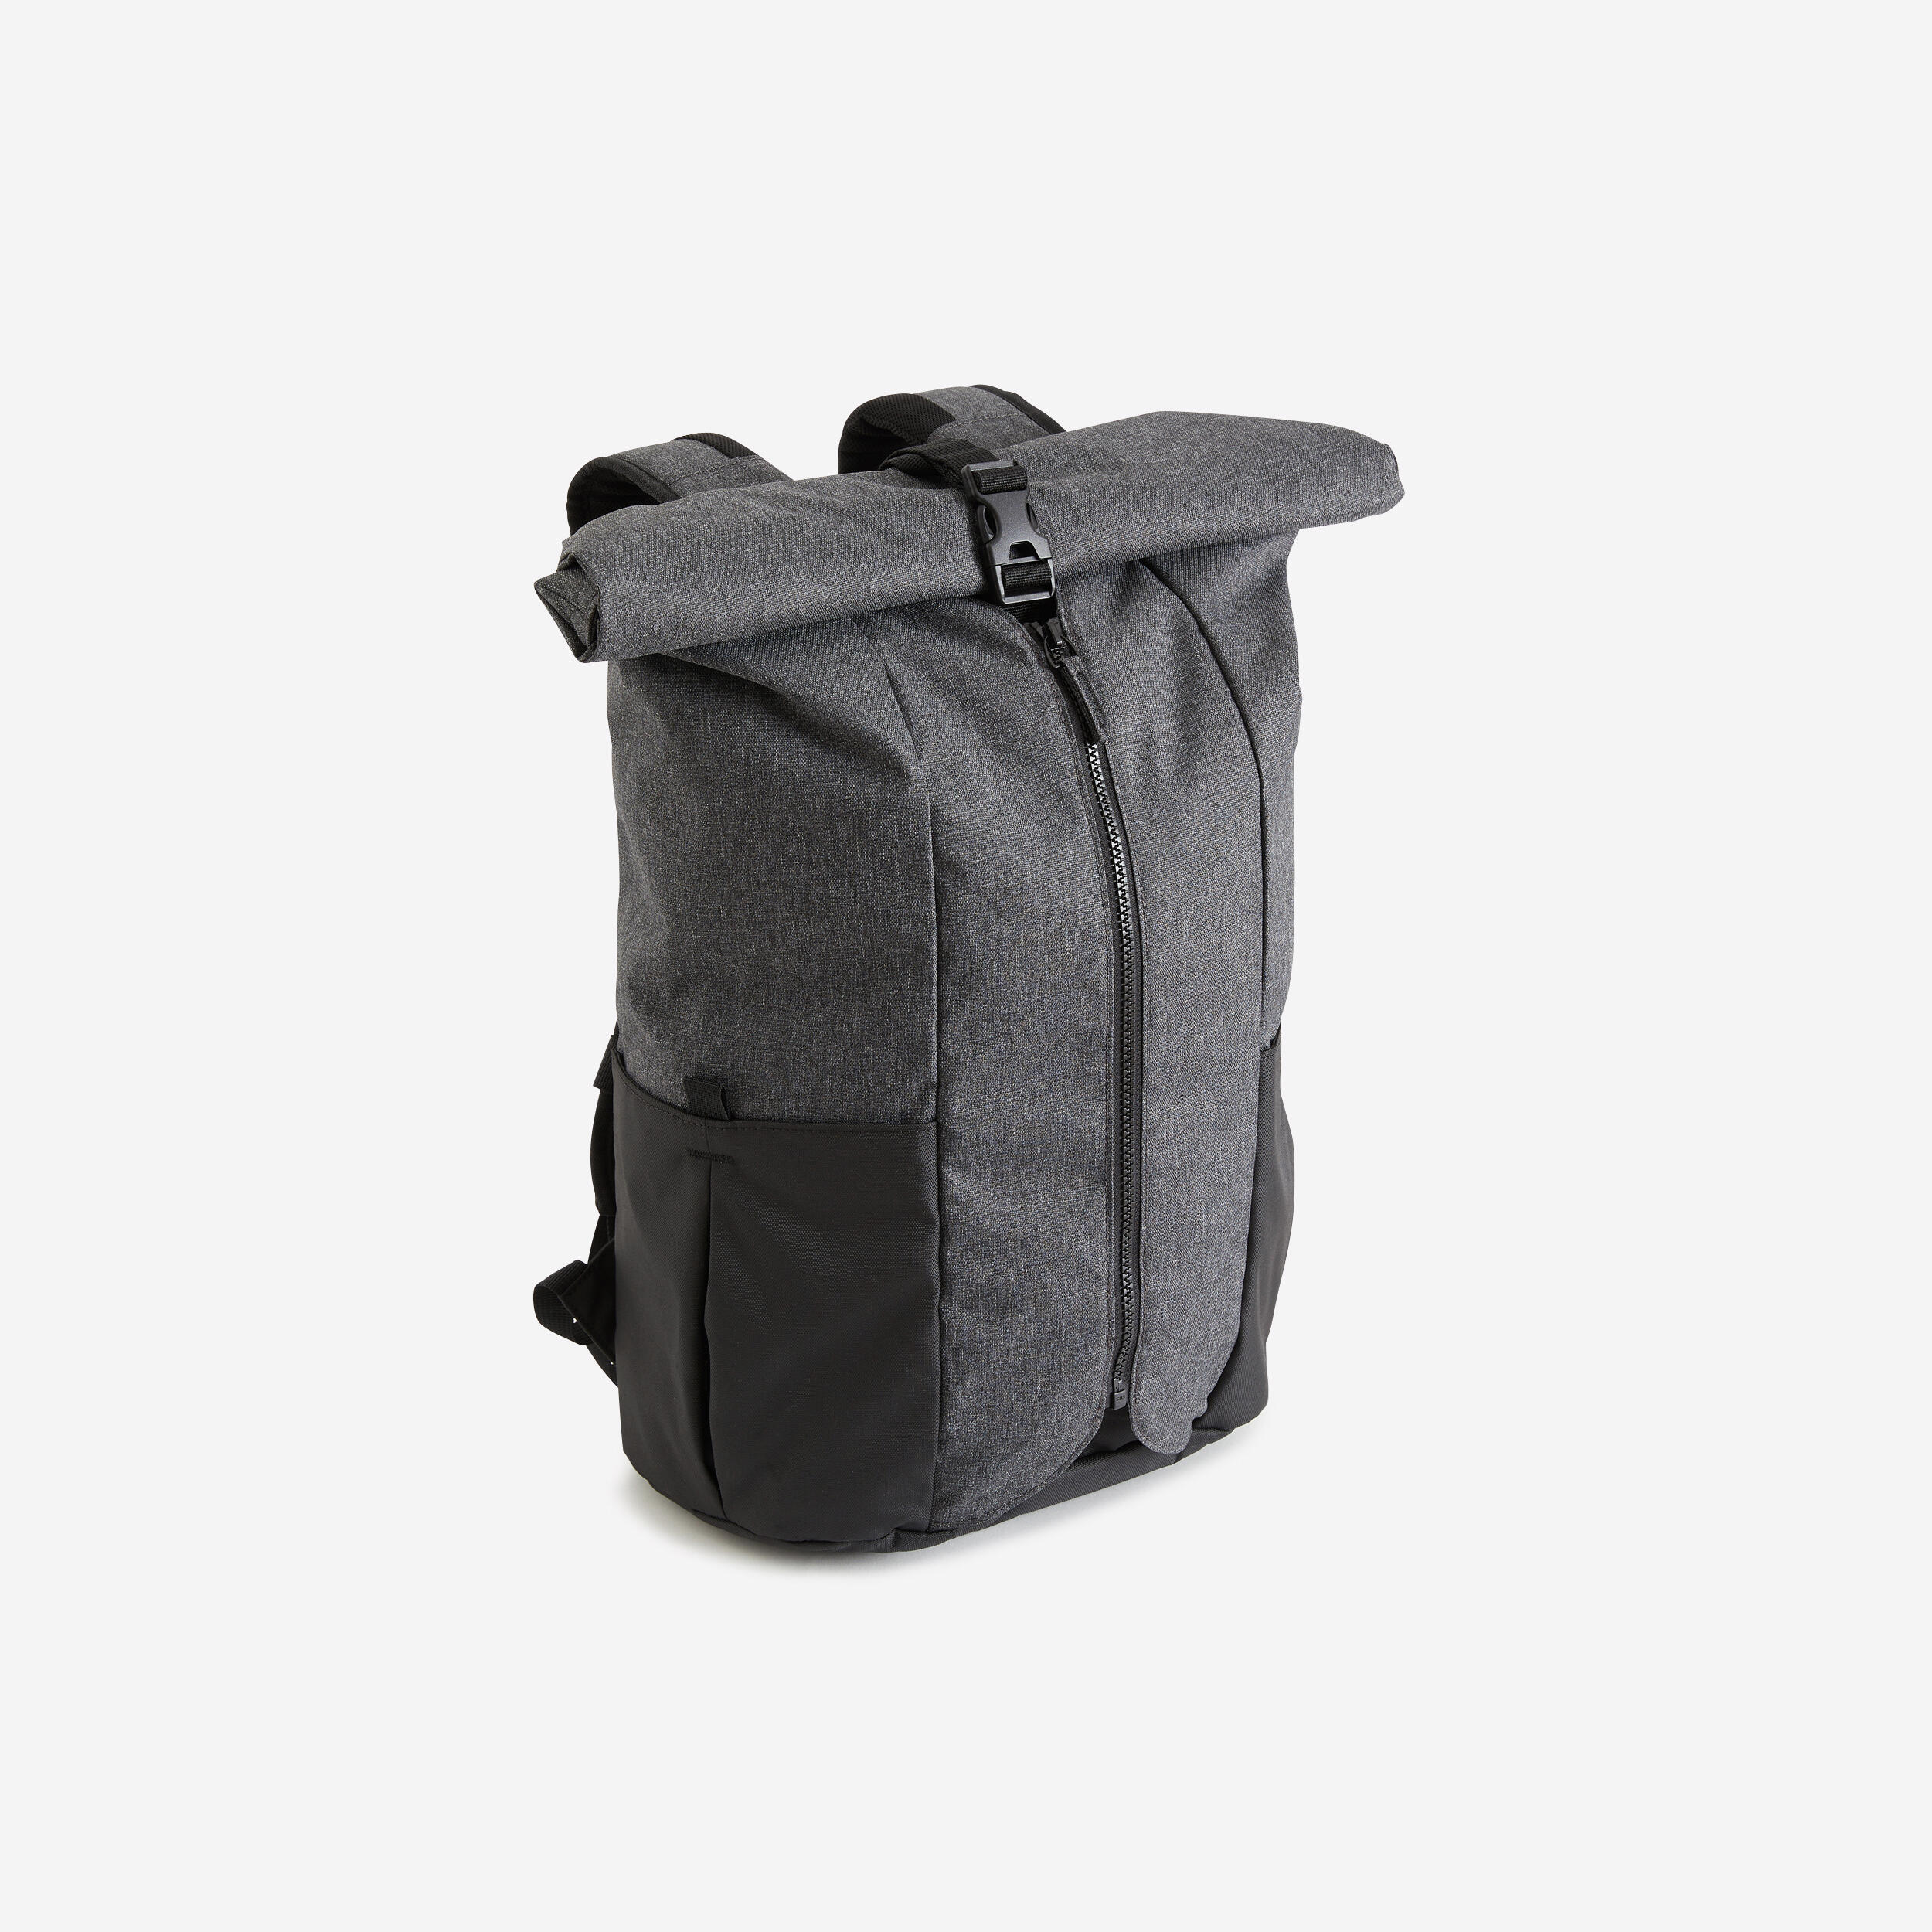 Yoga Mat Backpack - Grey/Black 5/5